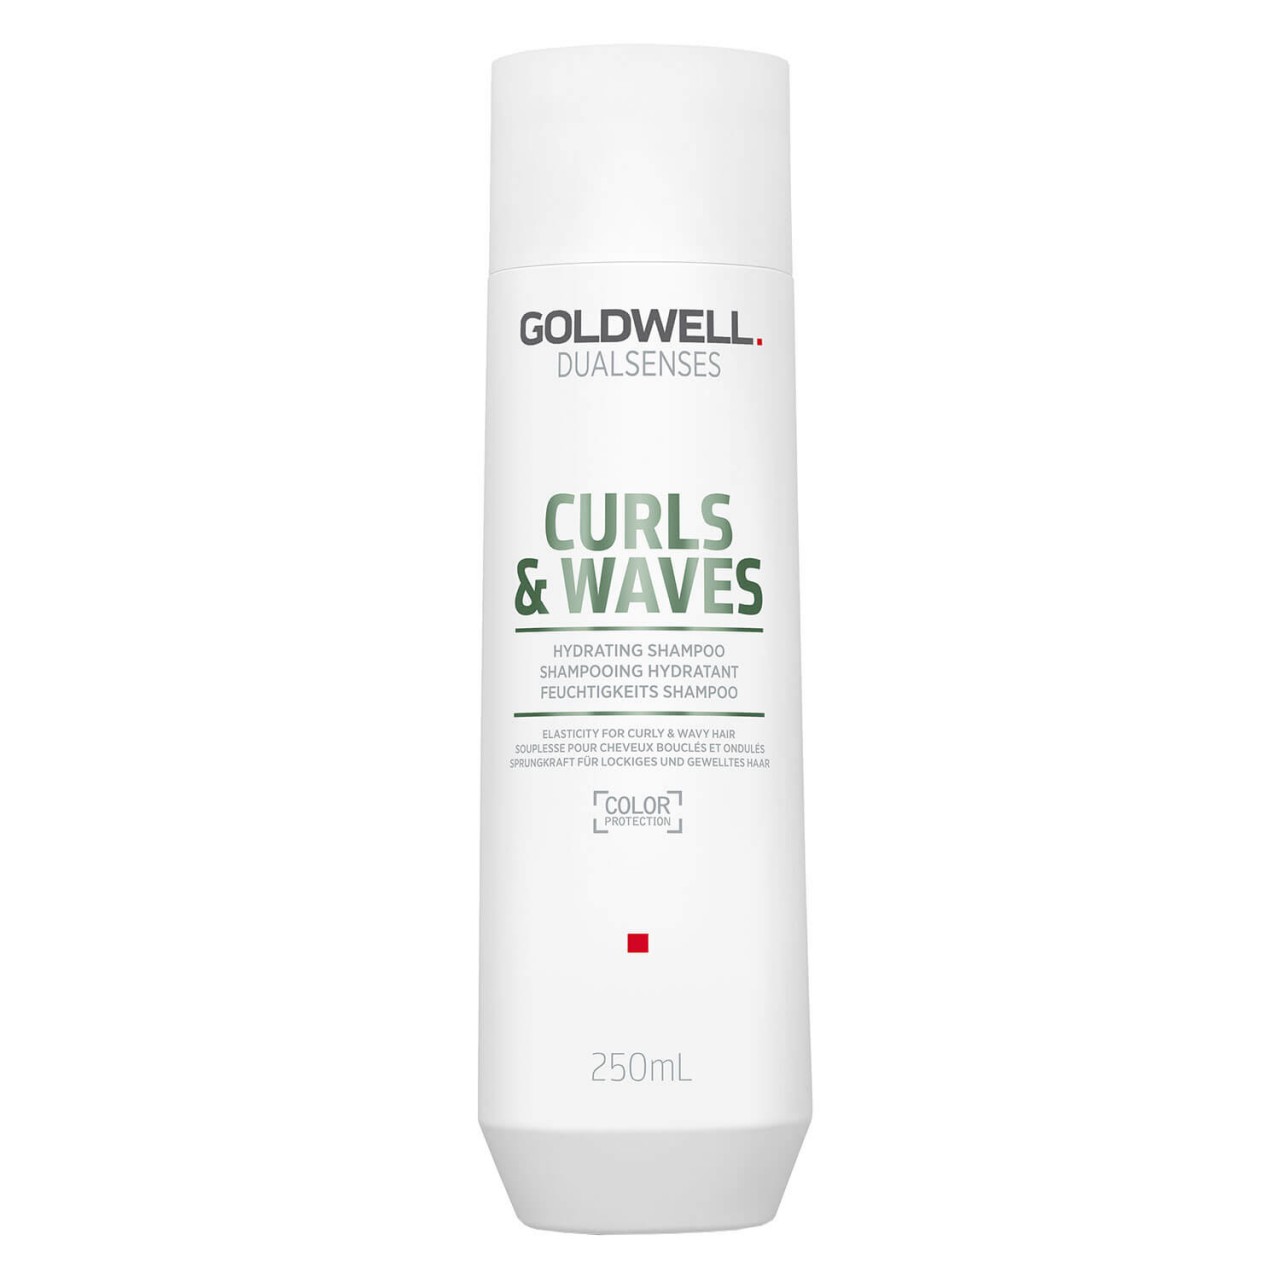 Dualsenses Curls & Waves - Hydrating Shampoo von Goldwell